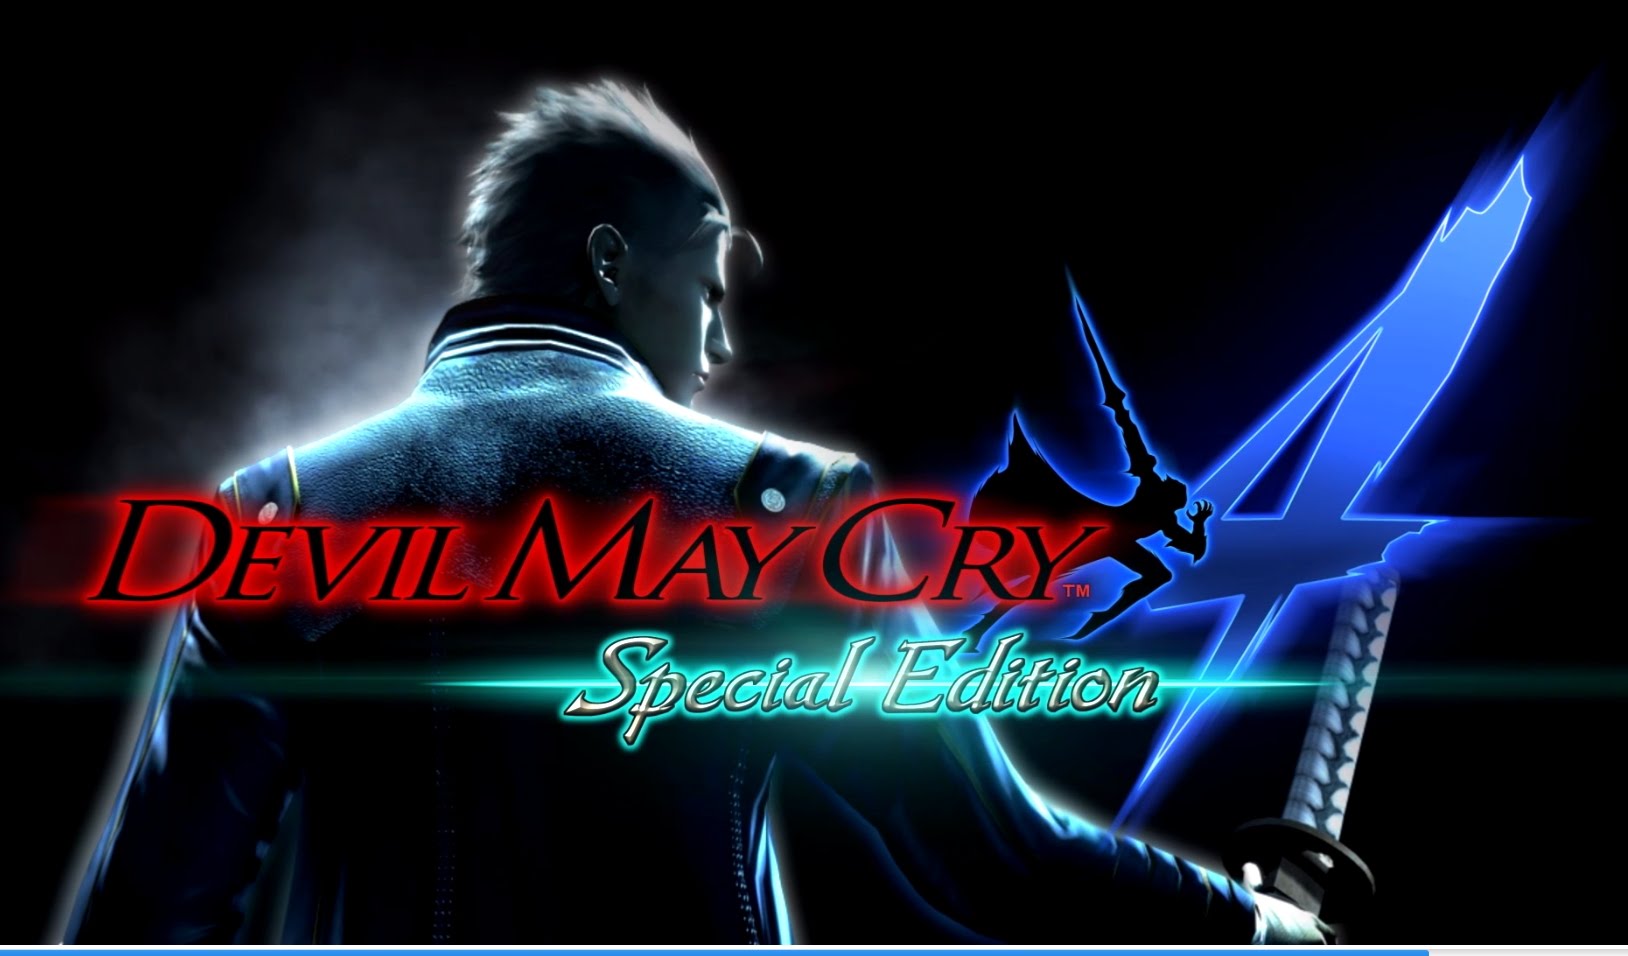 Devil May Cry 4 Special Edition im Ankündiungs-Trailer